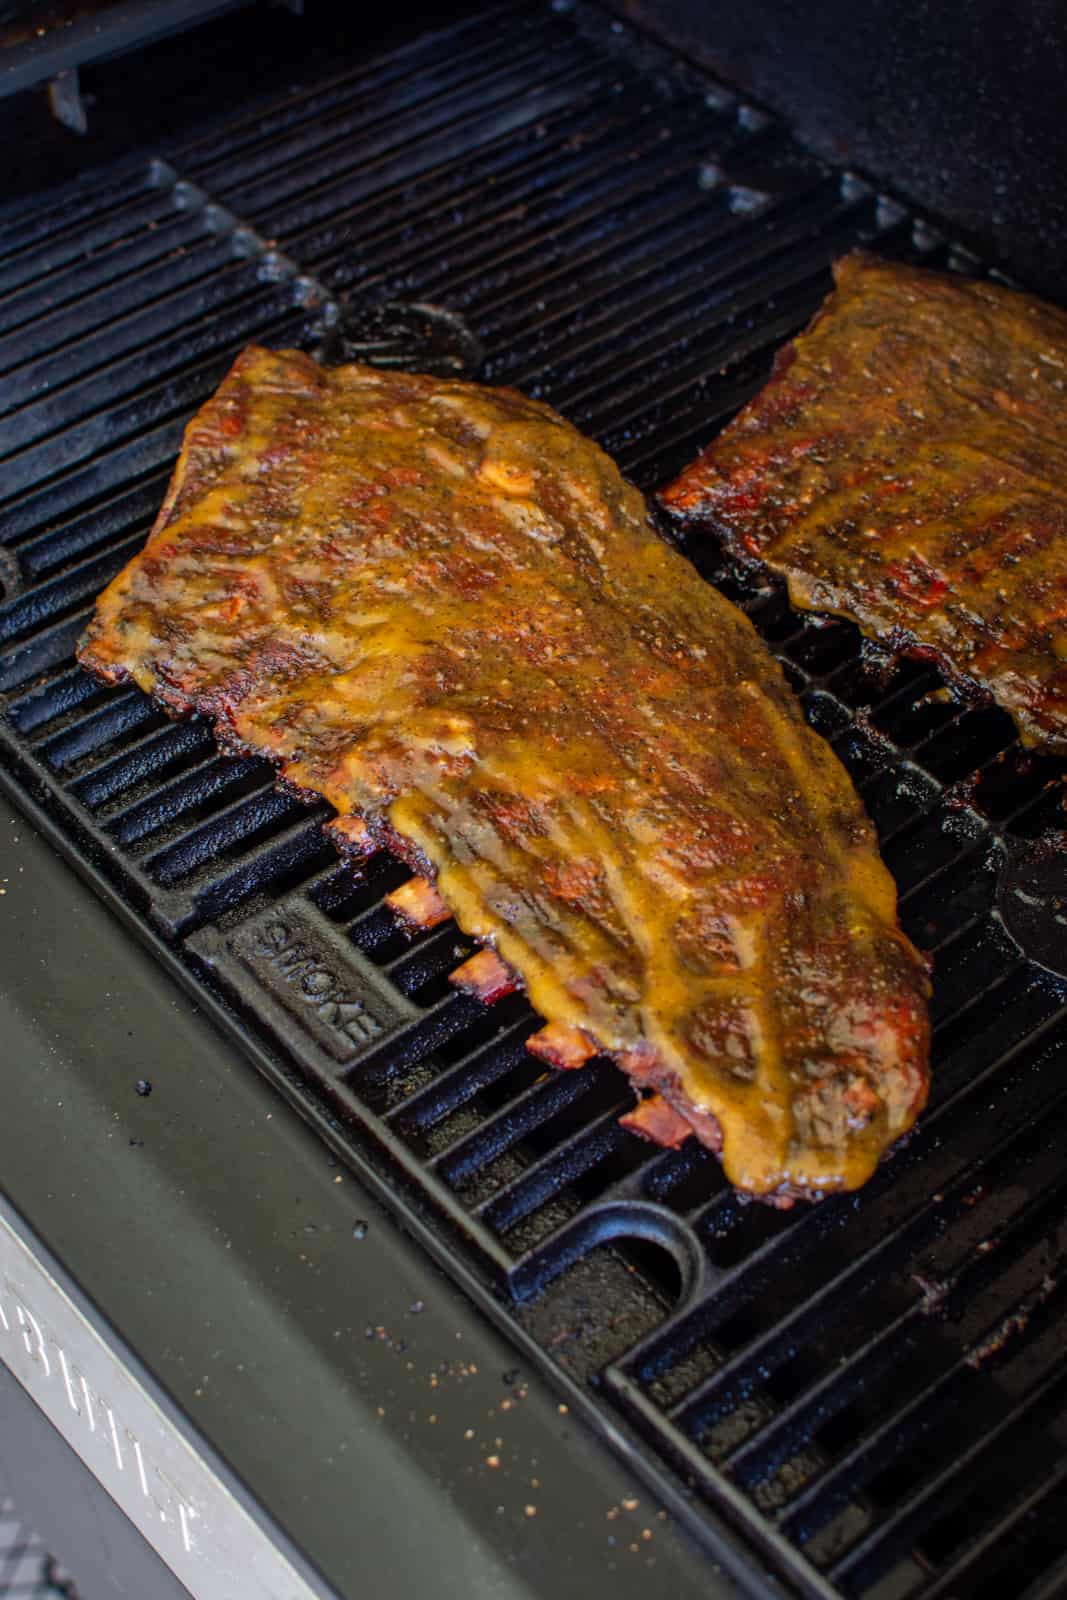 Glazed & smoked pork ribs on the BBQ 